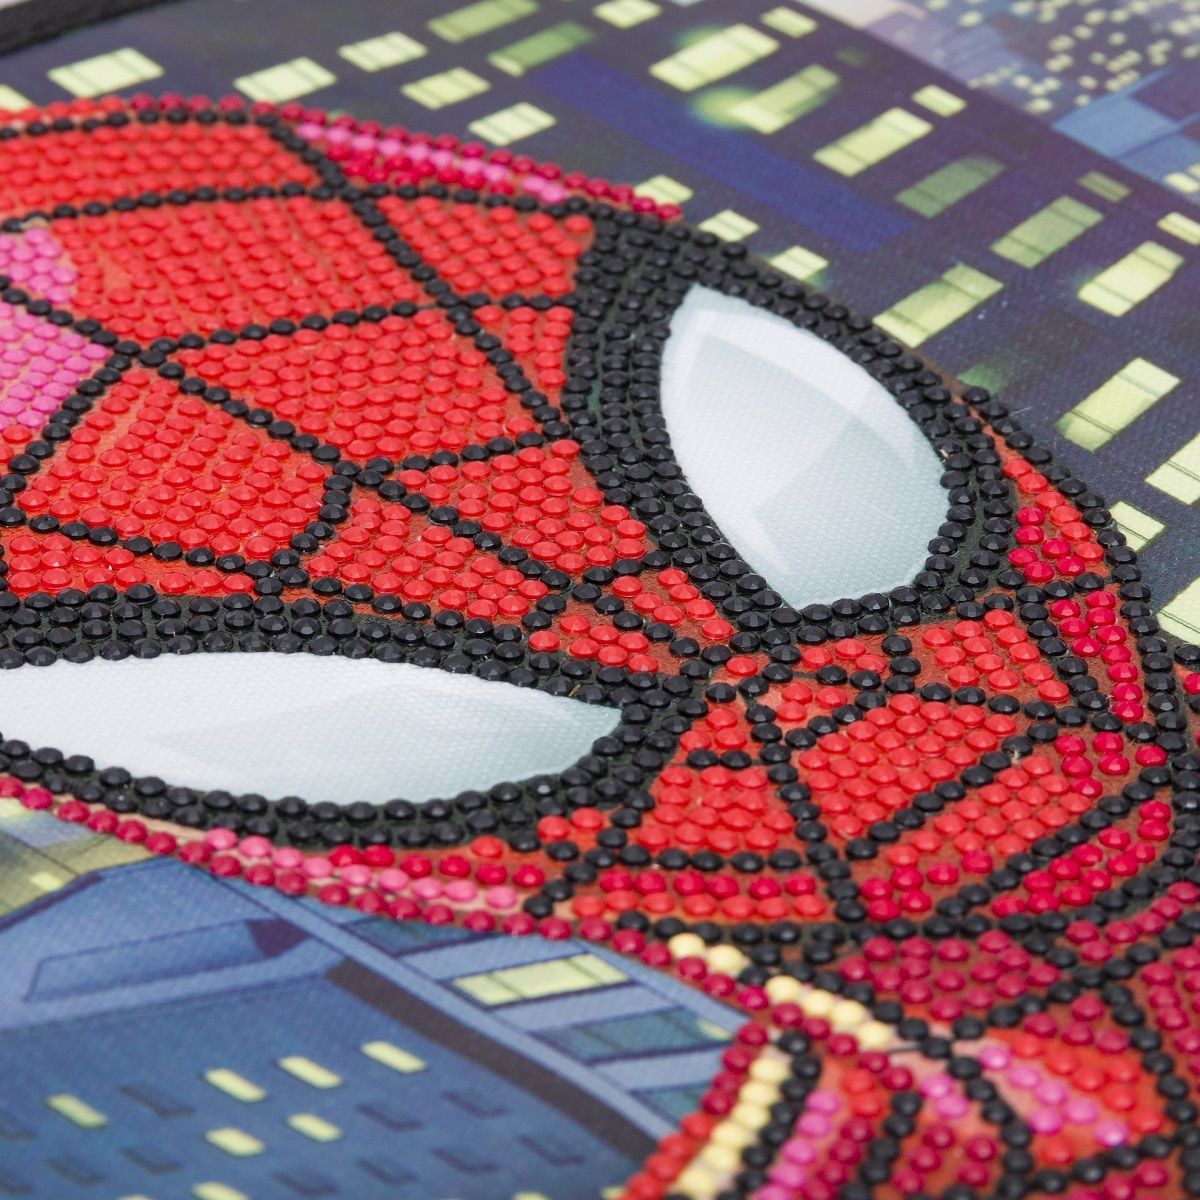 Crystal Art 30x30cm Foldable Storage Box - Spider Man